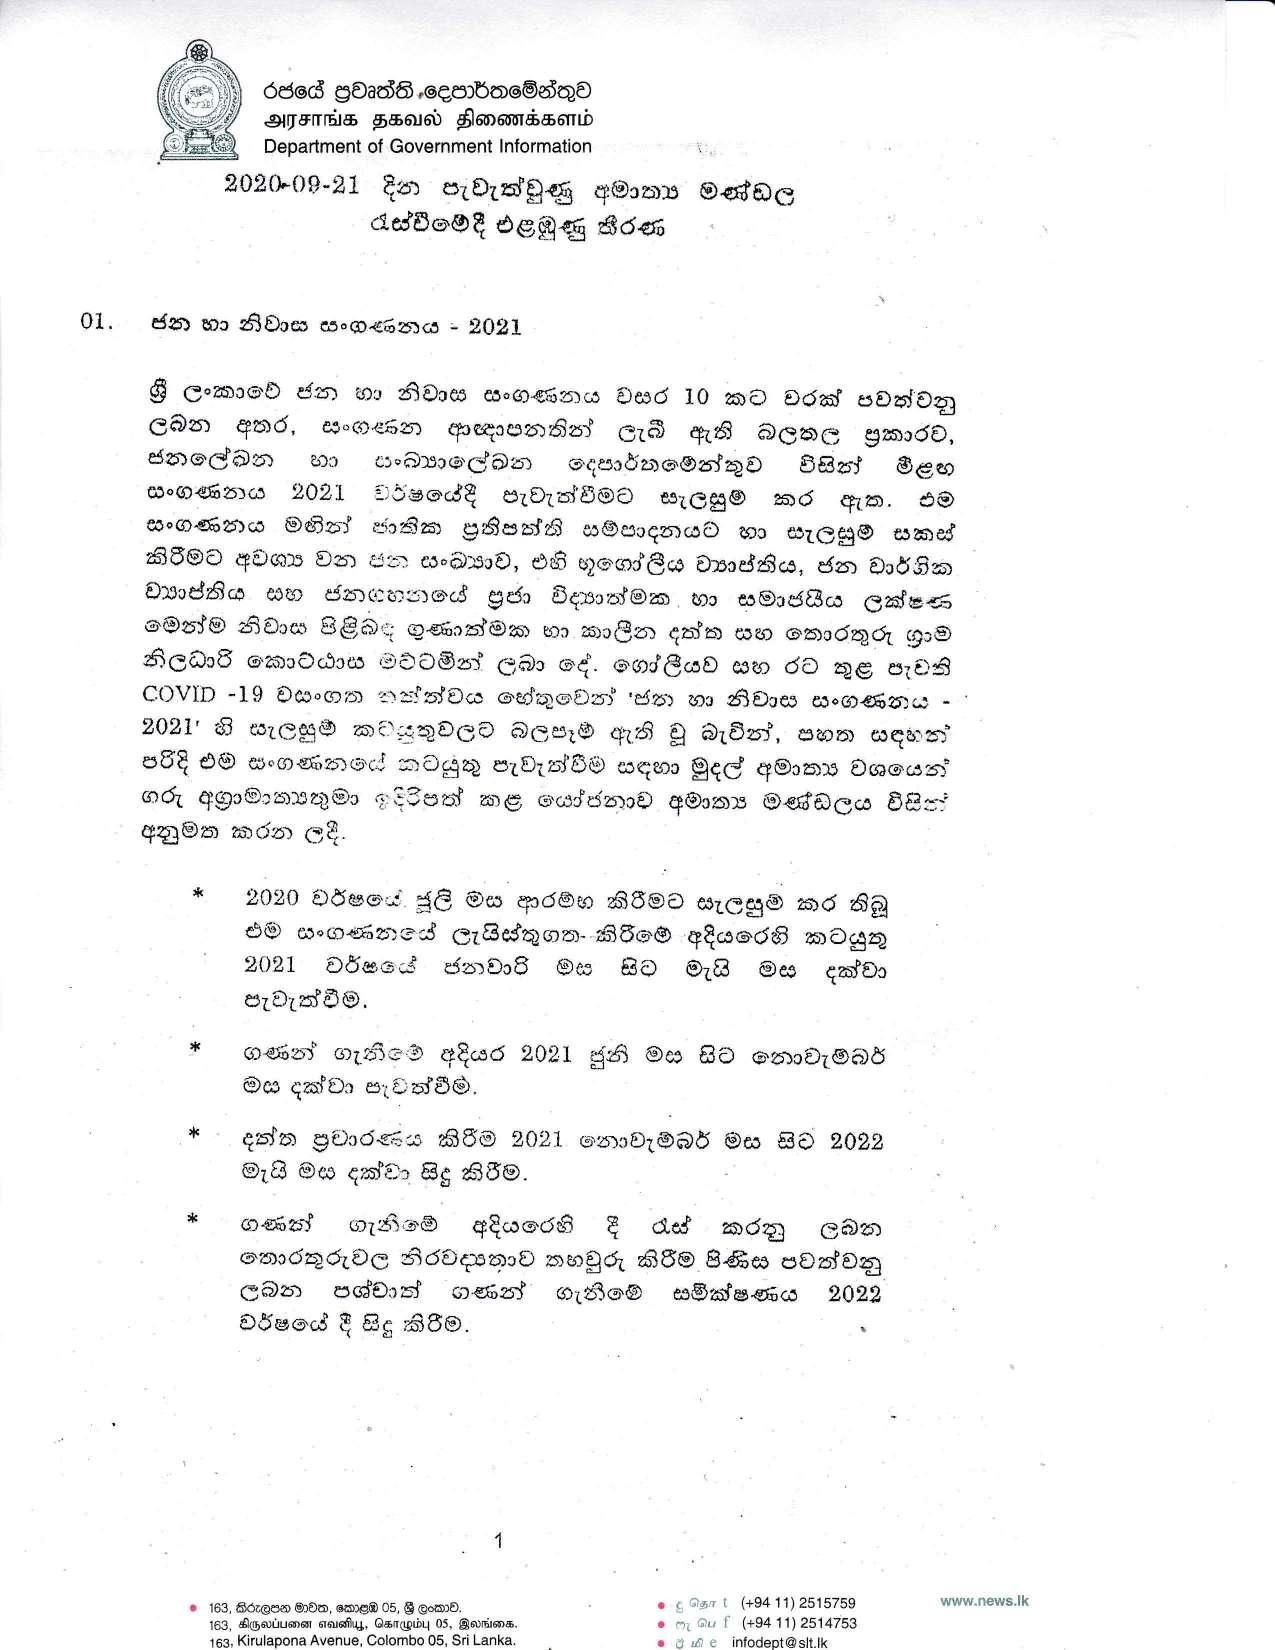 Cabinet Desicion on 21.09.2020 Sinhala page 001